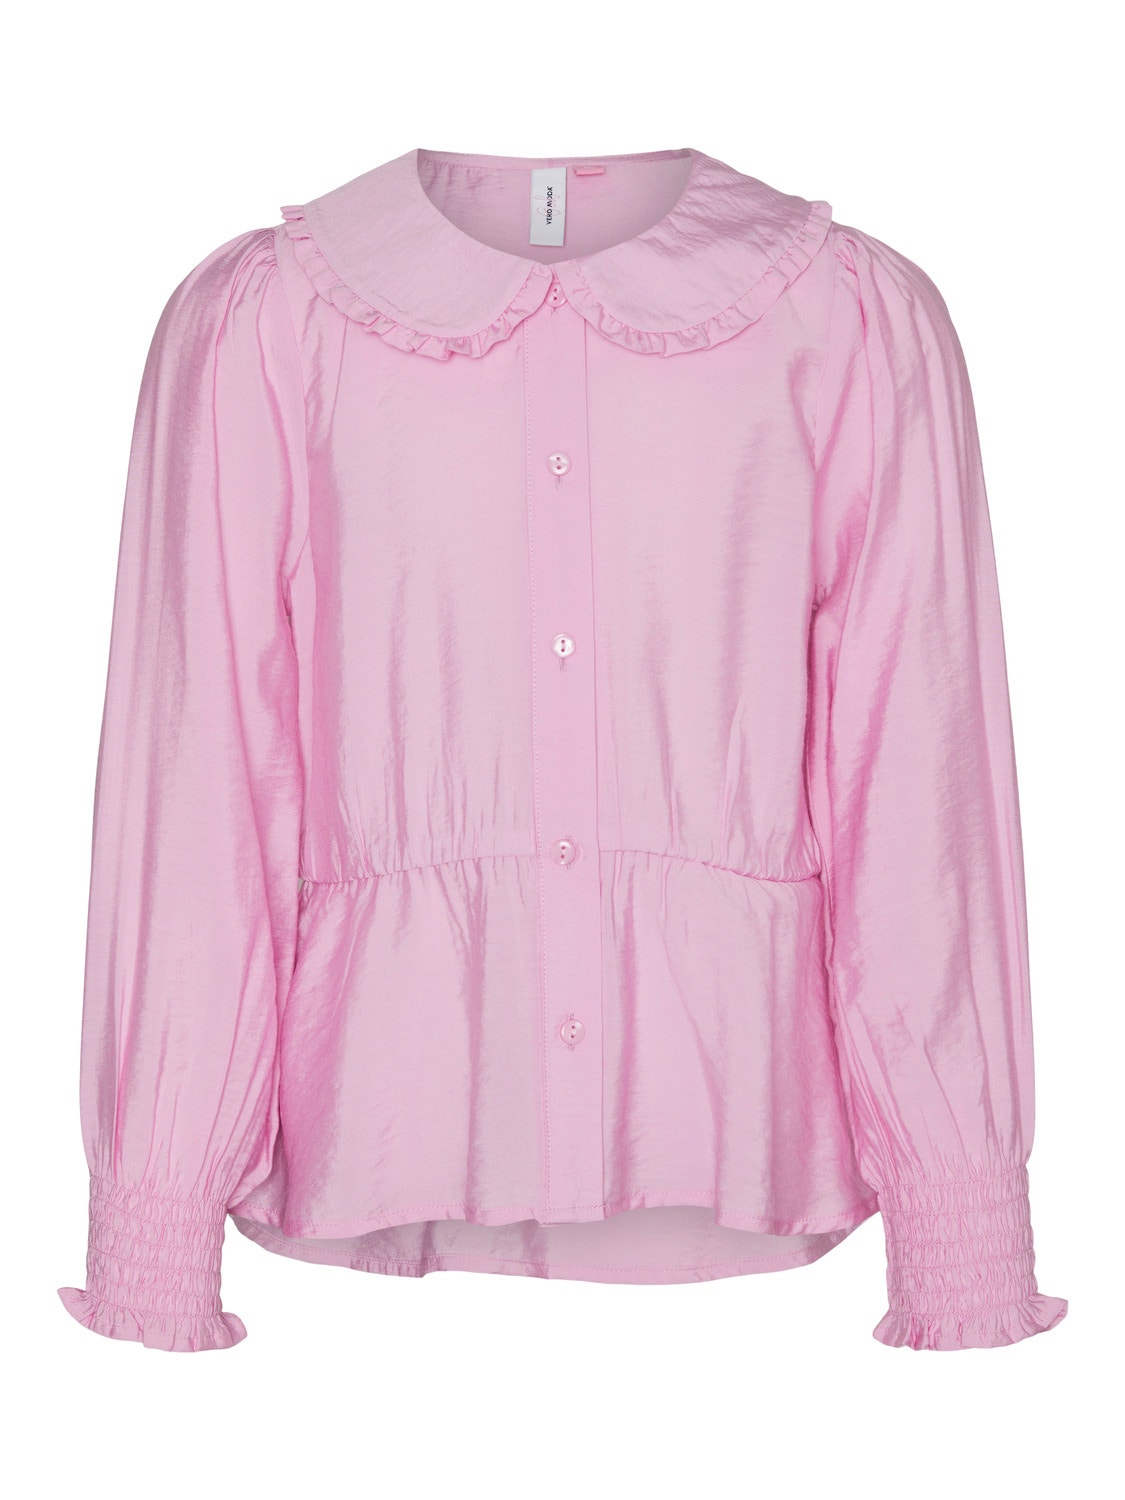 Vero Moda VMJOSIE Shirt -Pastel Lavender - 10303652